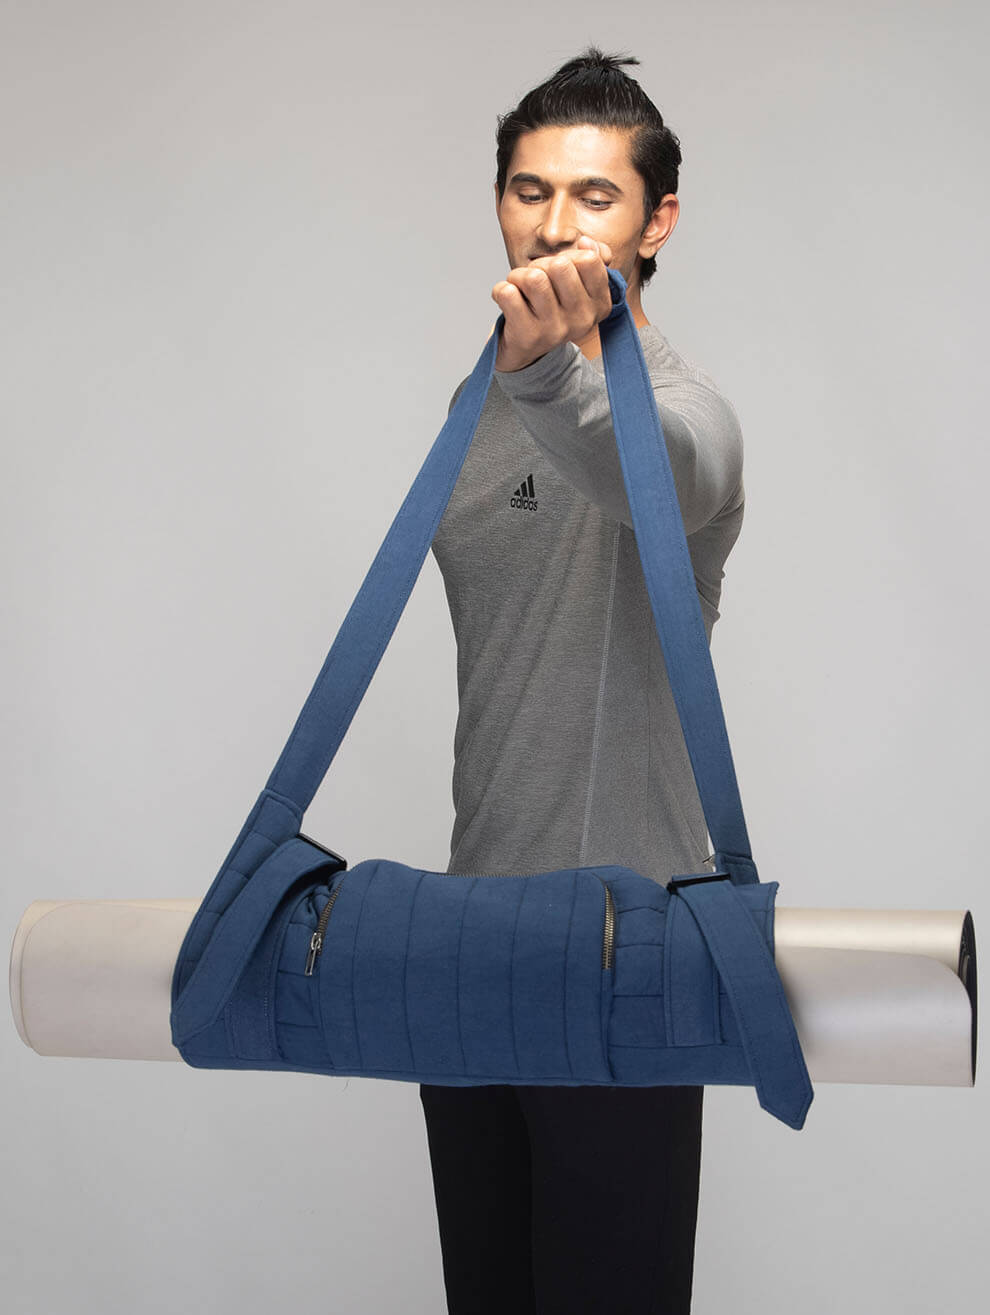 ASANA 60 Yoga Mat Bag with end pocket - fits 60cm wide Yoga Mats